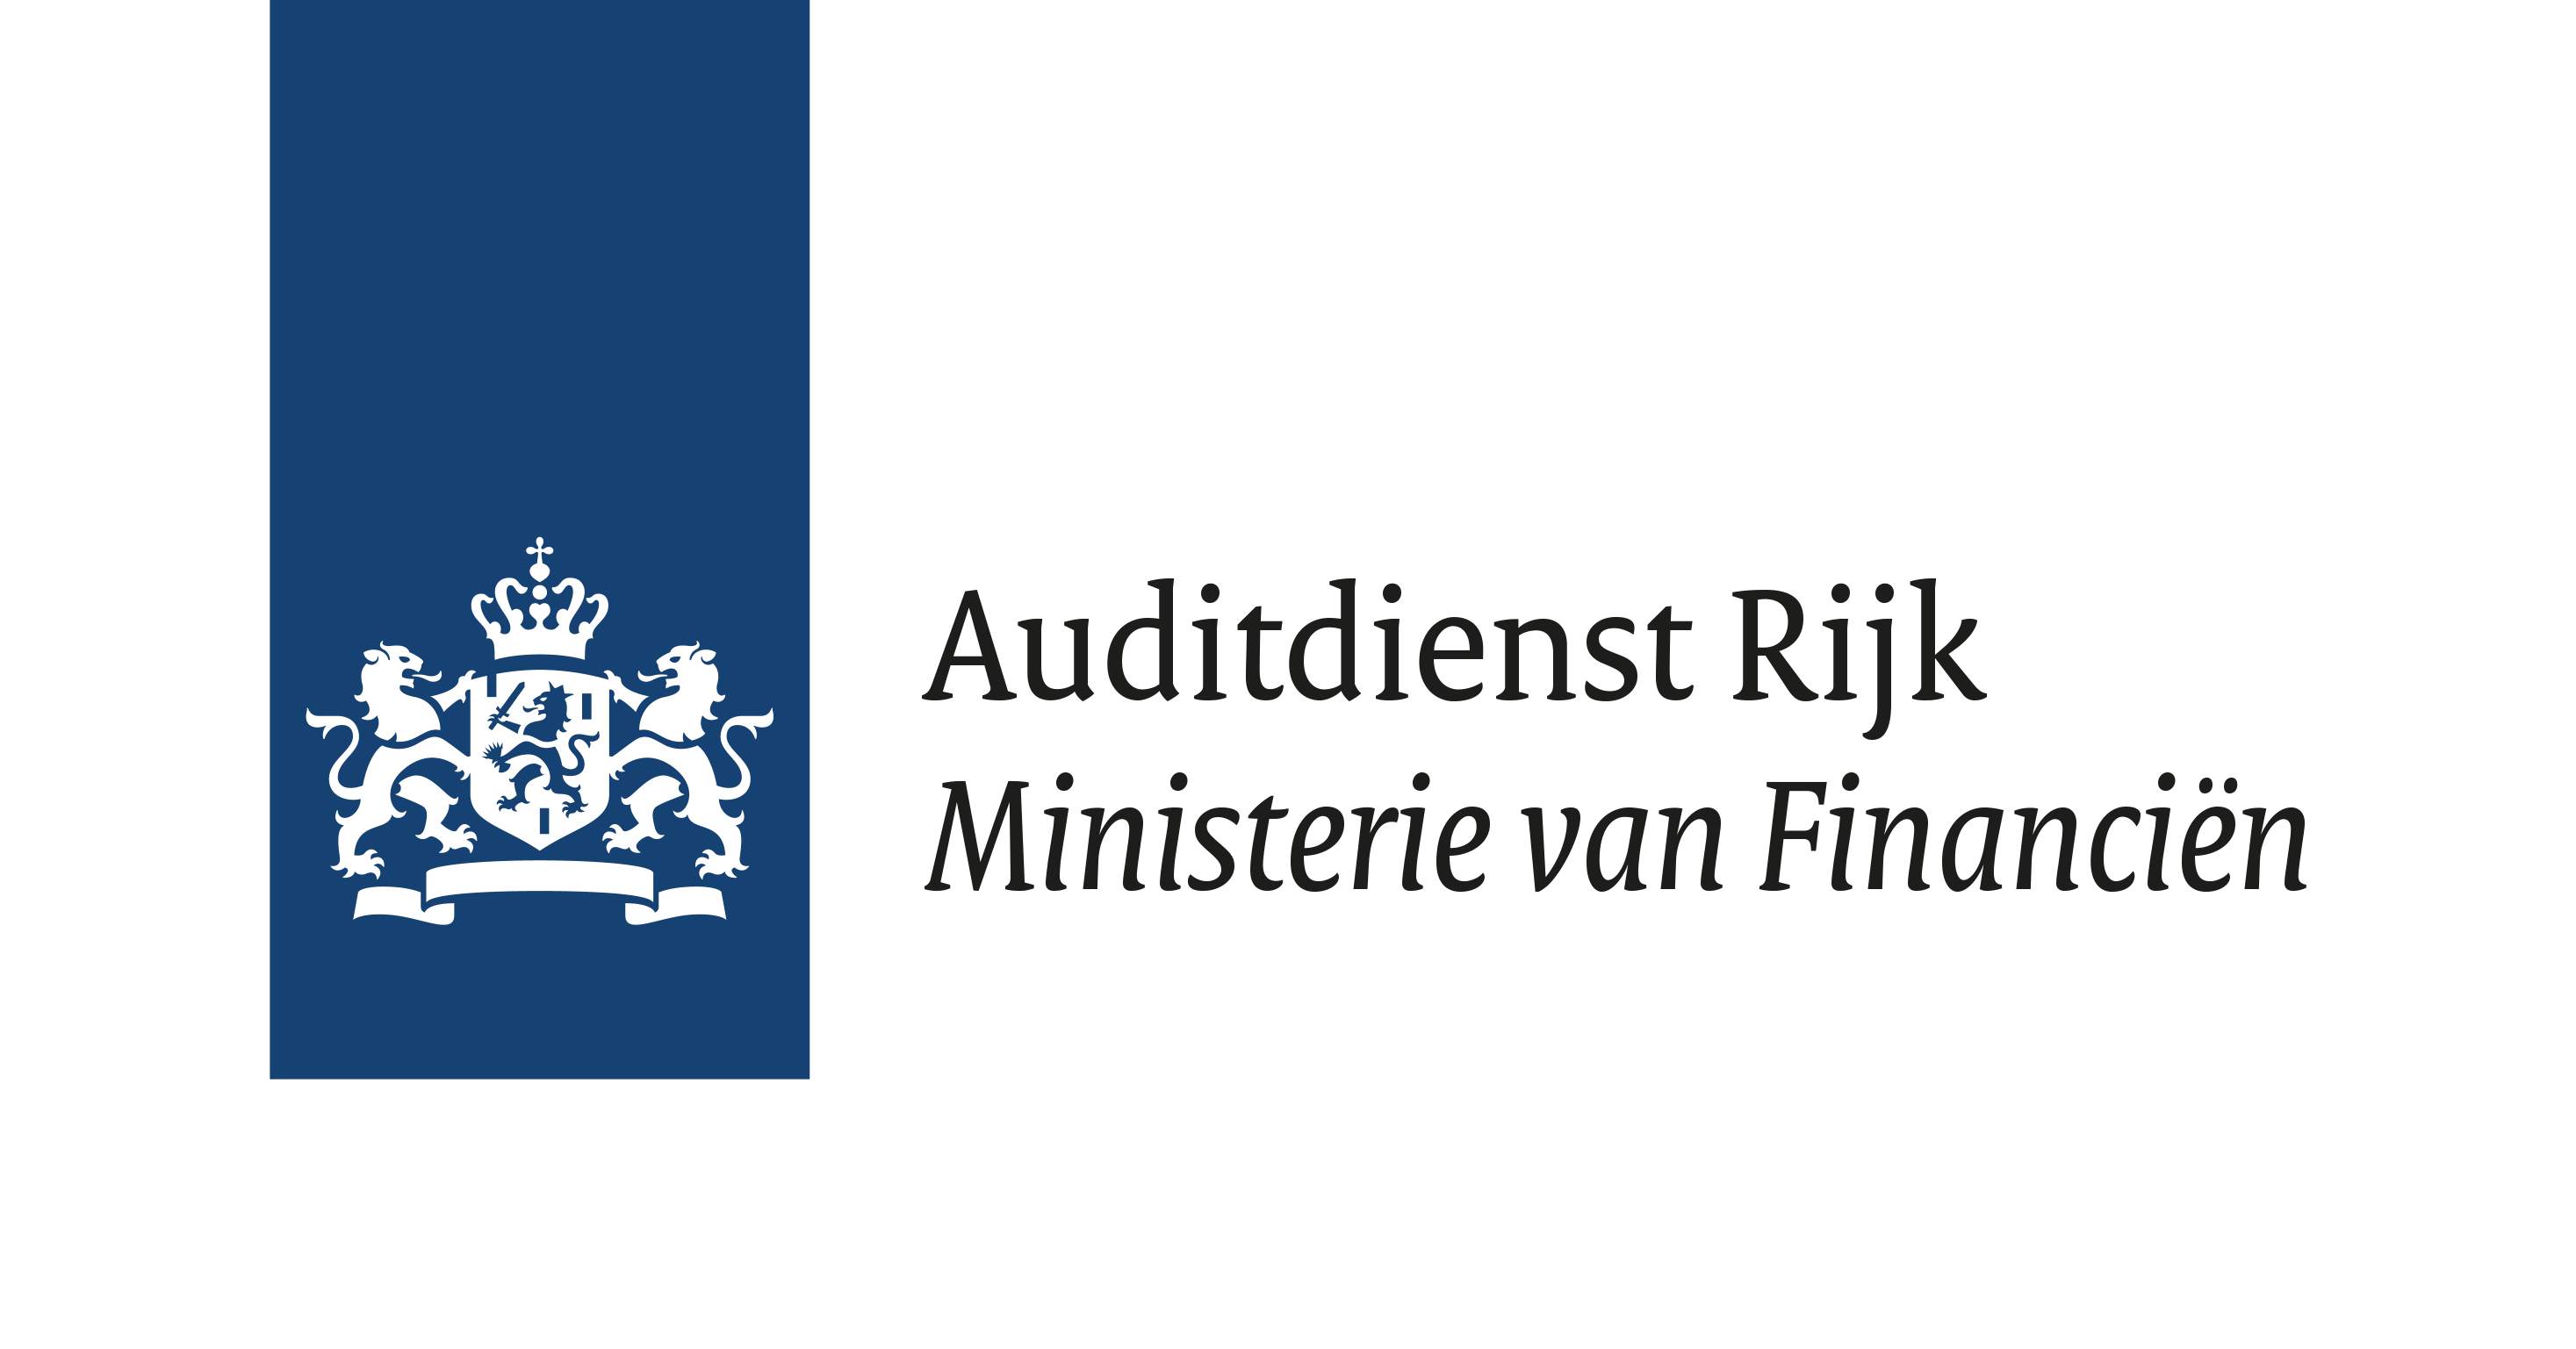 Auditdienst Rijk | Ministerie van Financiën logo